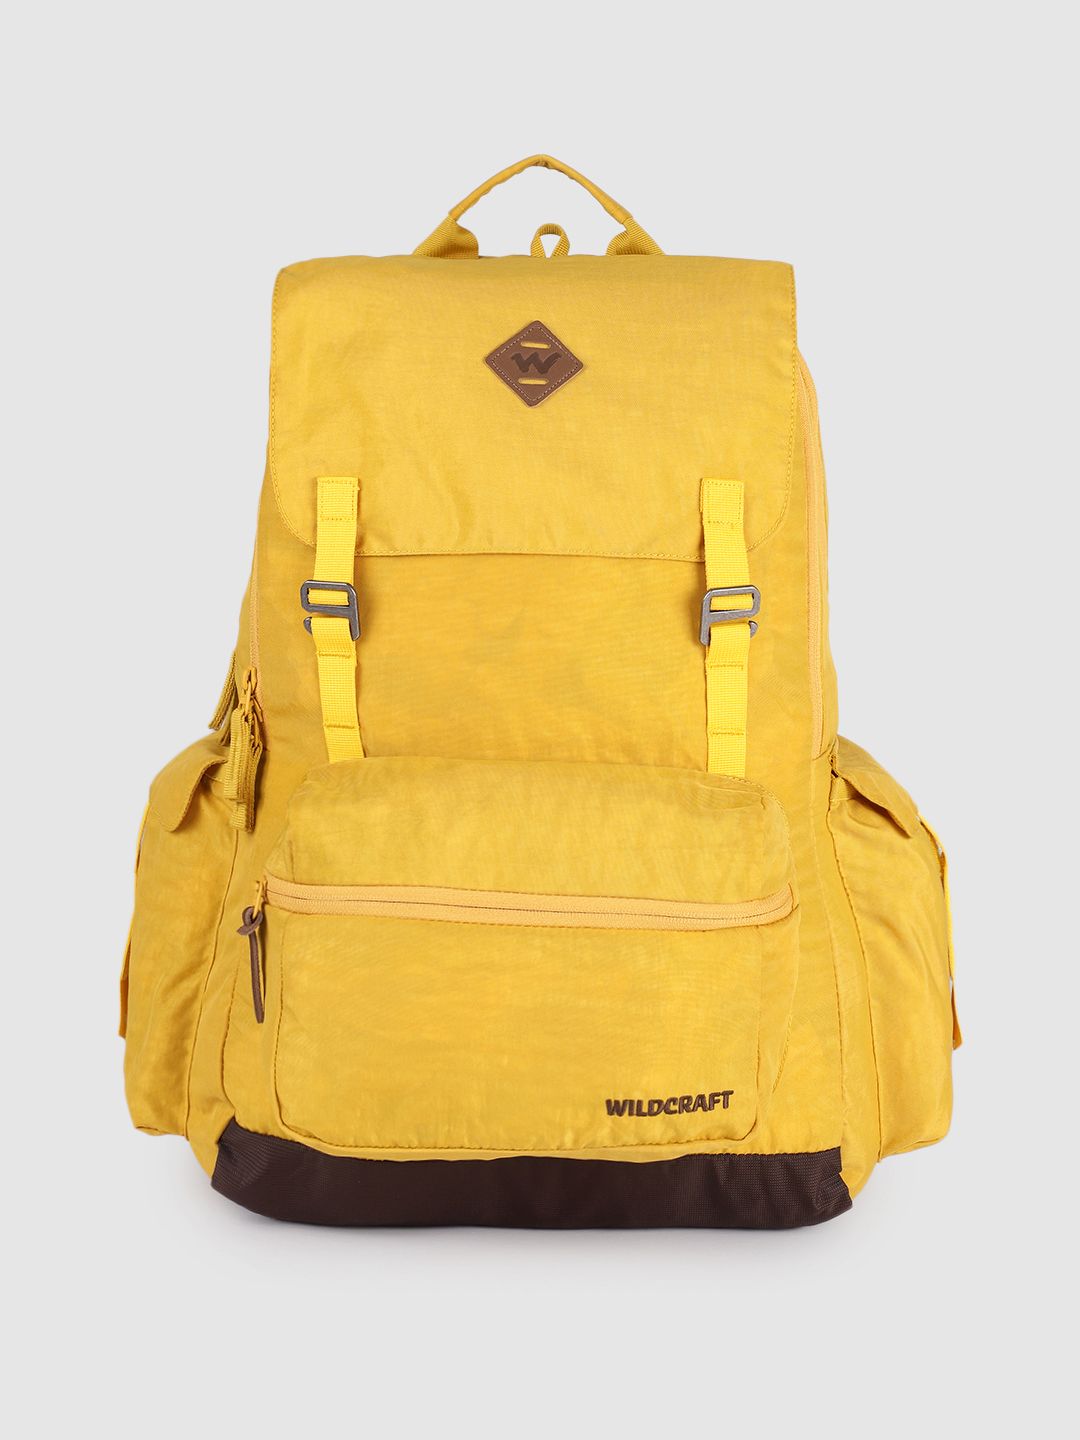 Wildcraft Unisex Yellow Gratis Laptop Backpack Price in India